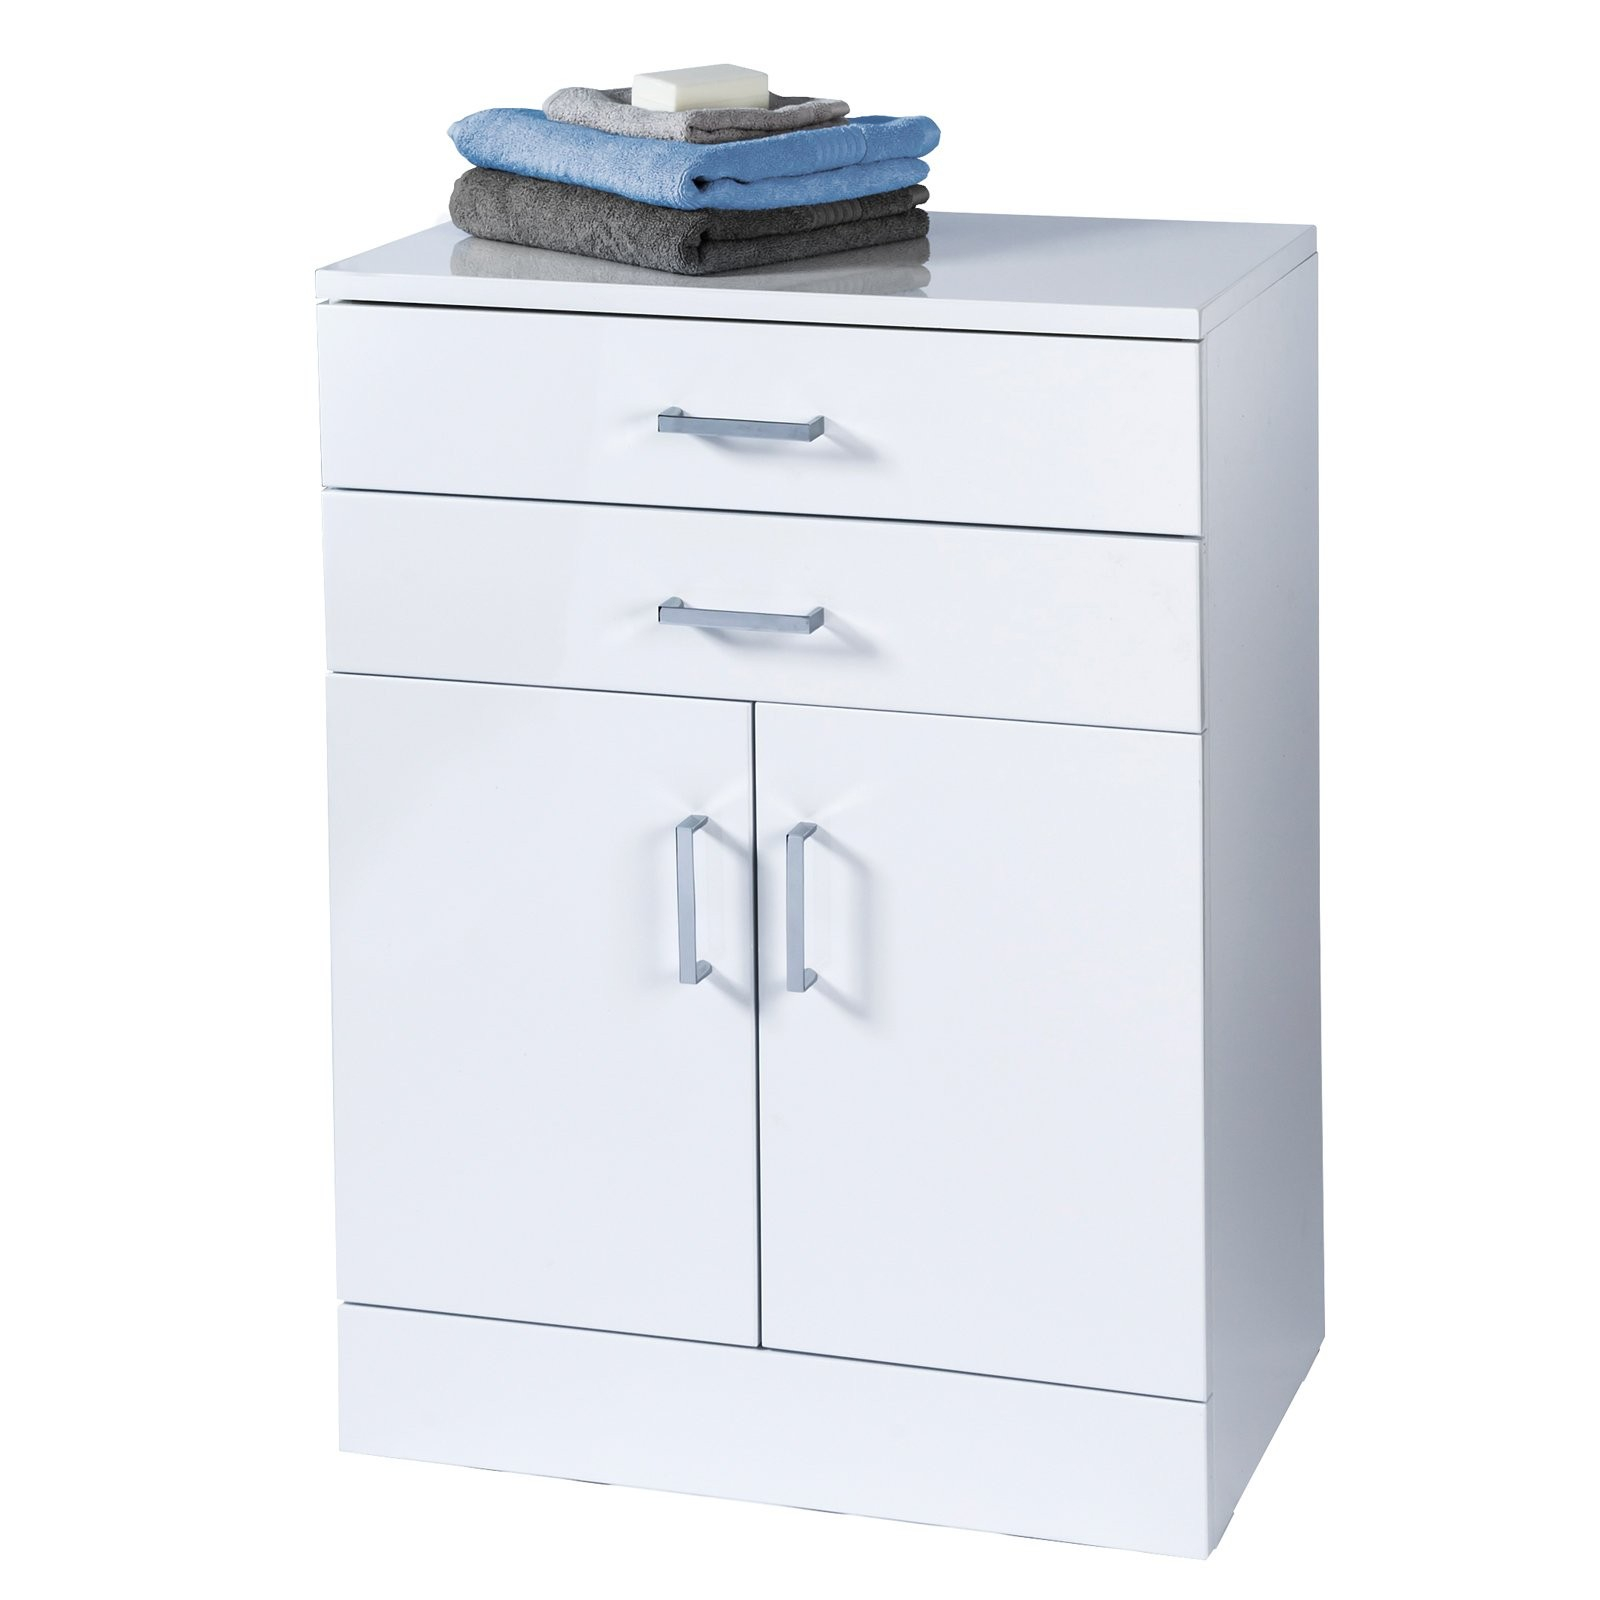 Trento Freestanding White Gloss Bathroom Cabinet Showerdrape Flubit with regard to measurements 1600 X 1600